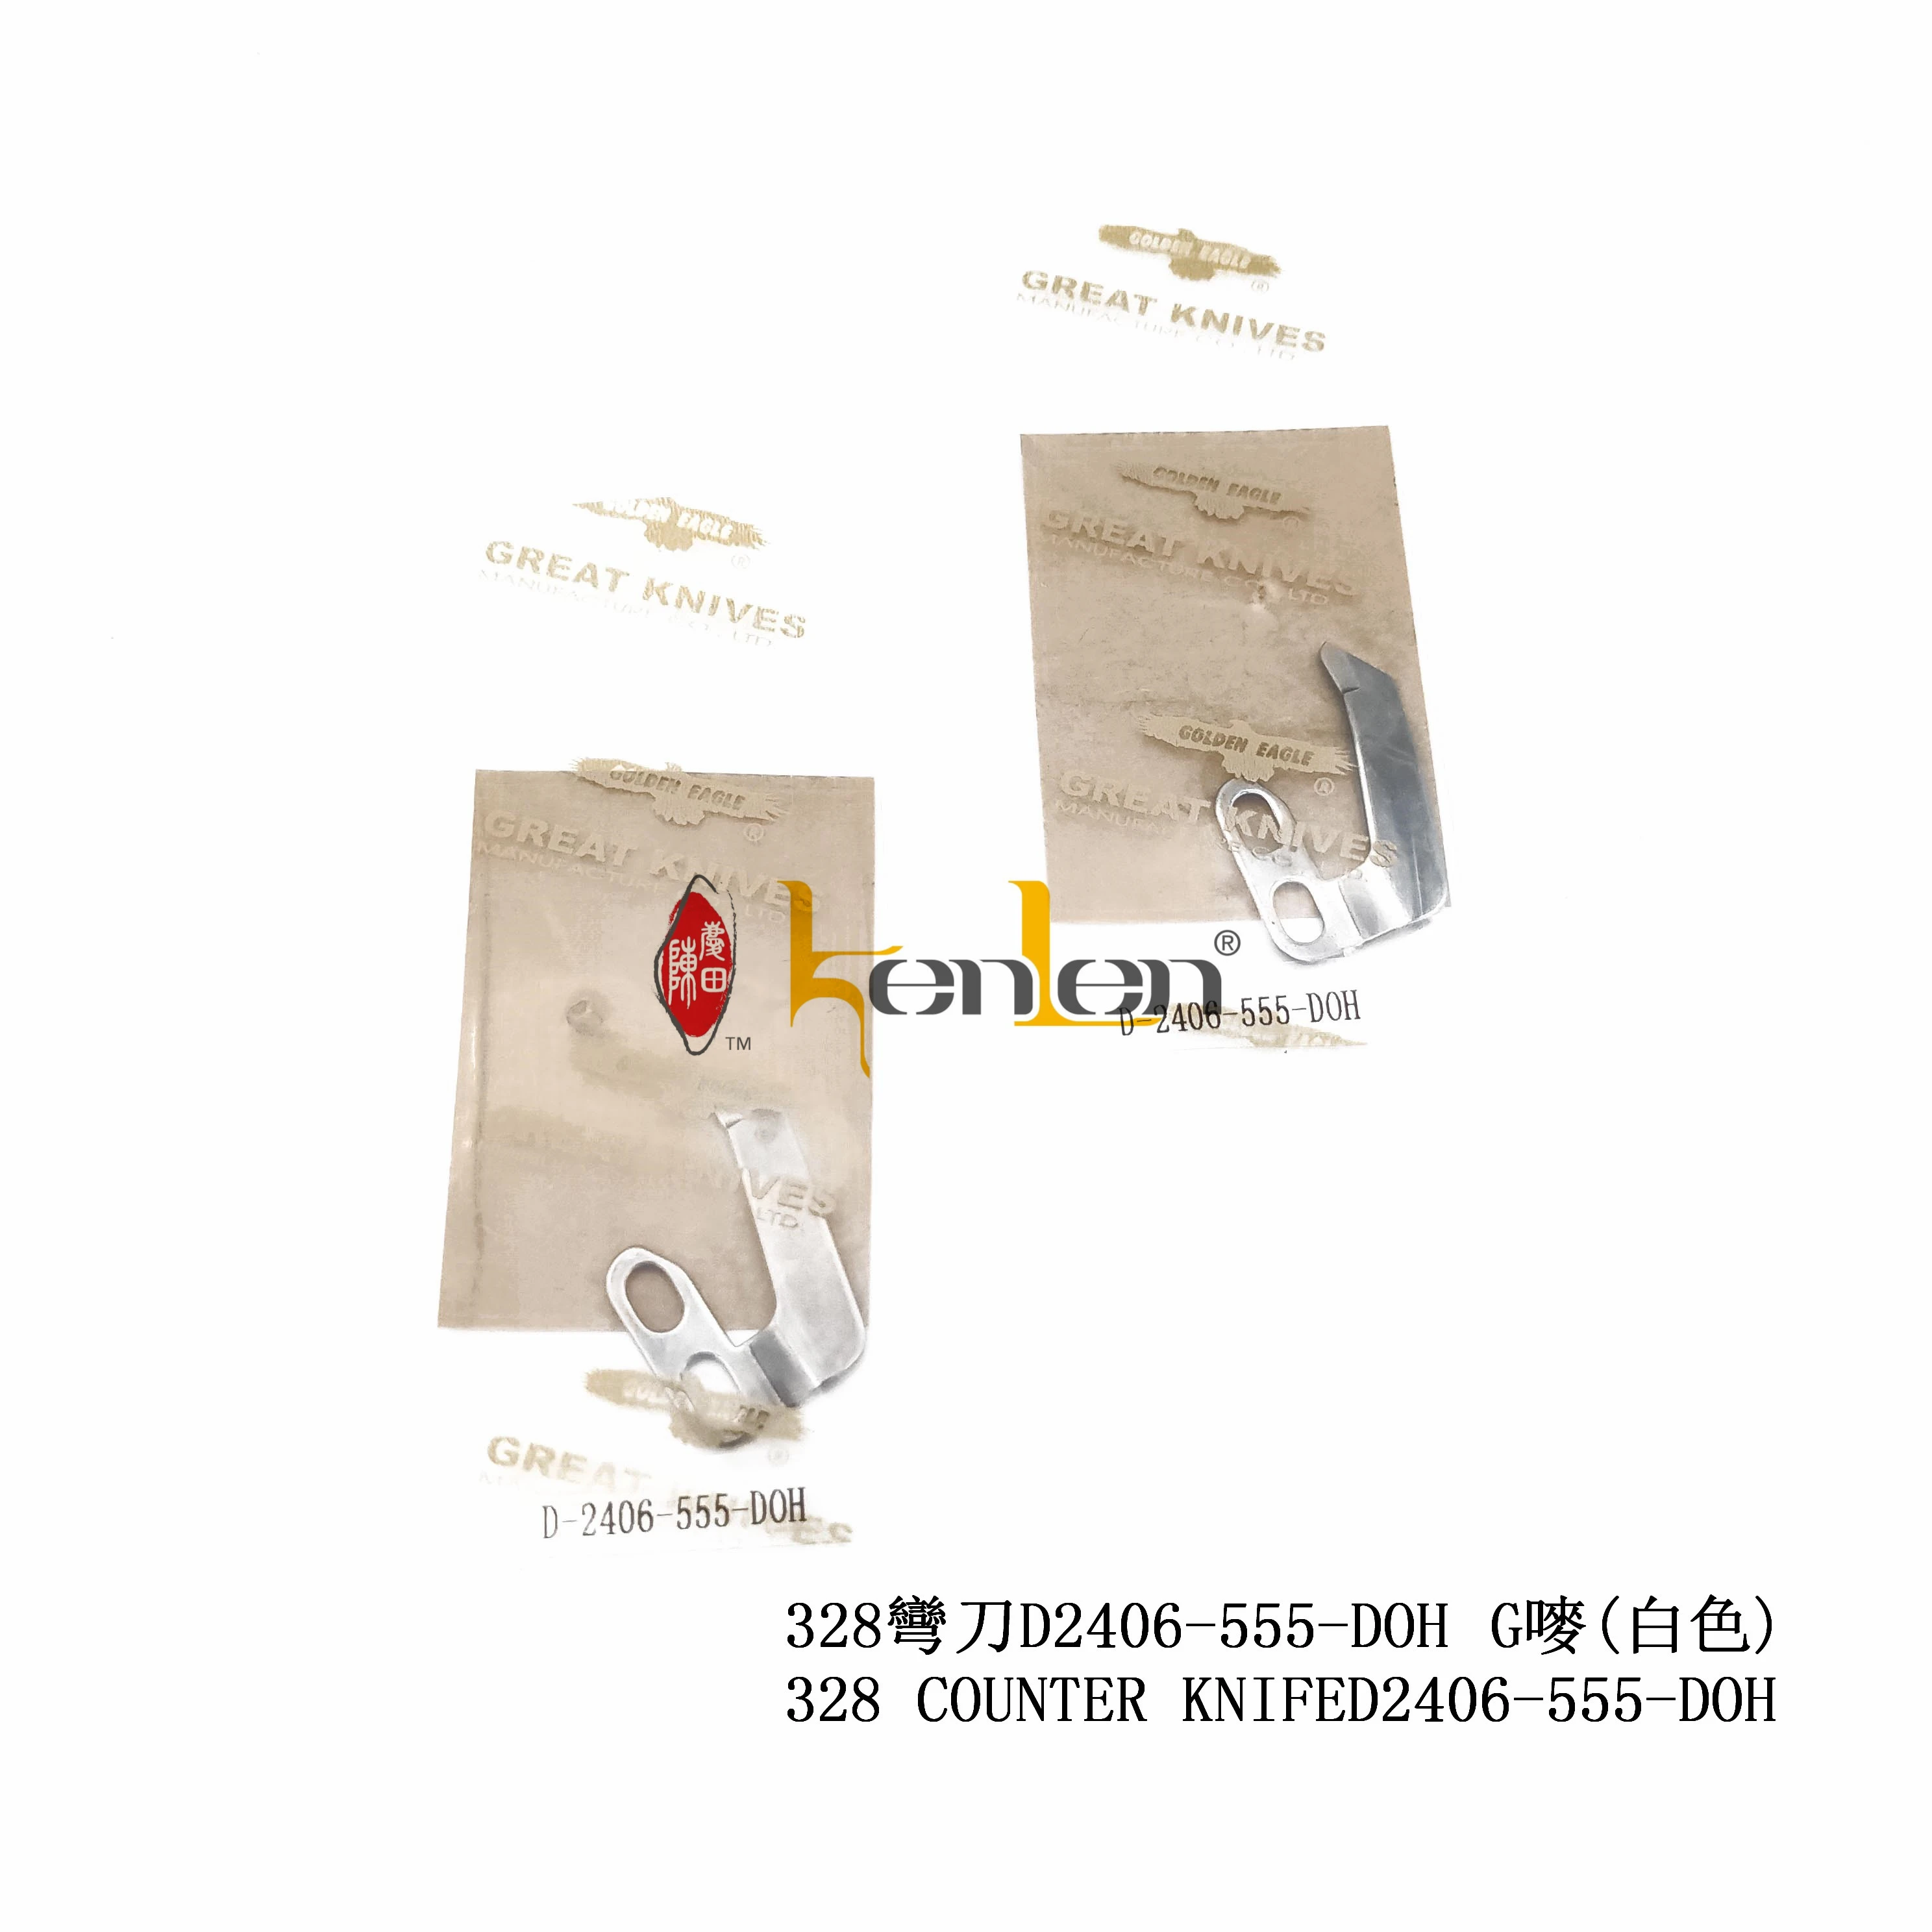 BEST SELLING KENLEN Hong Kong Sole Agent GOLDEN EAGLE 328 Counter Knife KK2406-555-DOH Industrial Sewing Machine Spare Parts